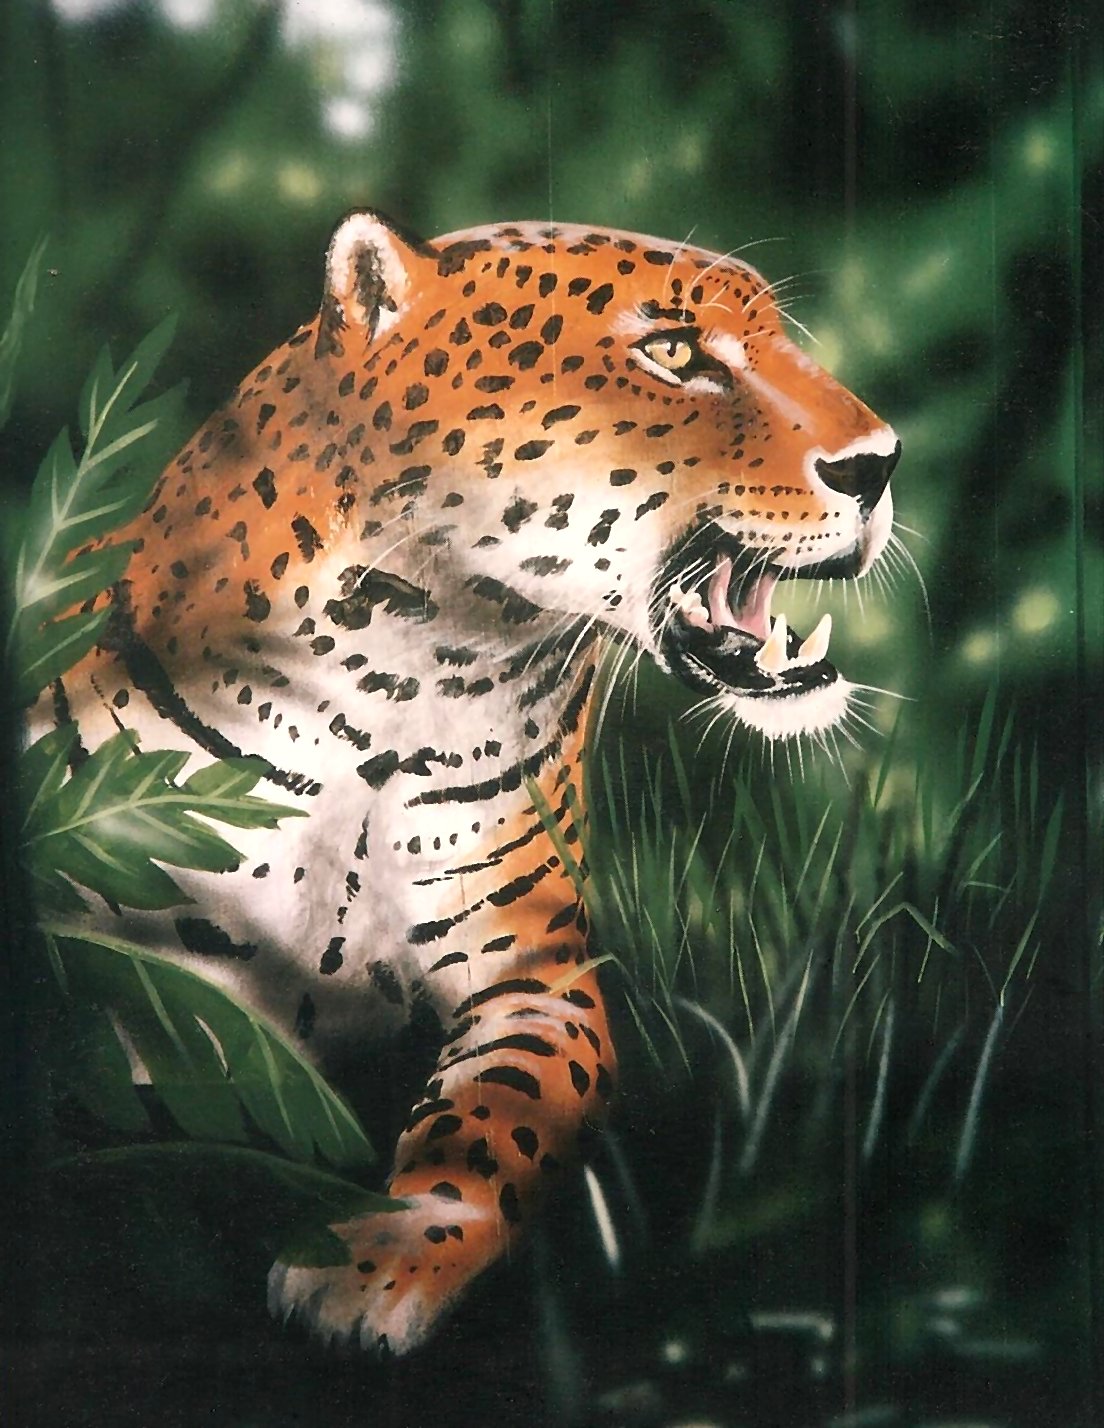 Big cat  murals by Paul Barker for Rainforest  Cafe  